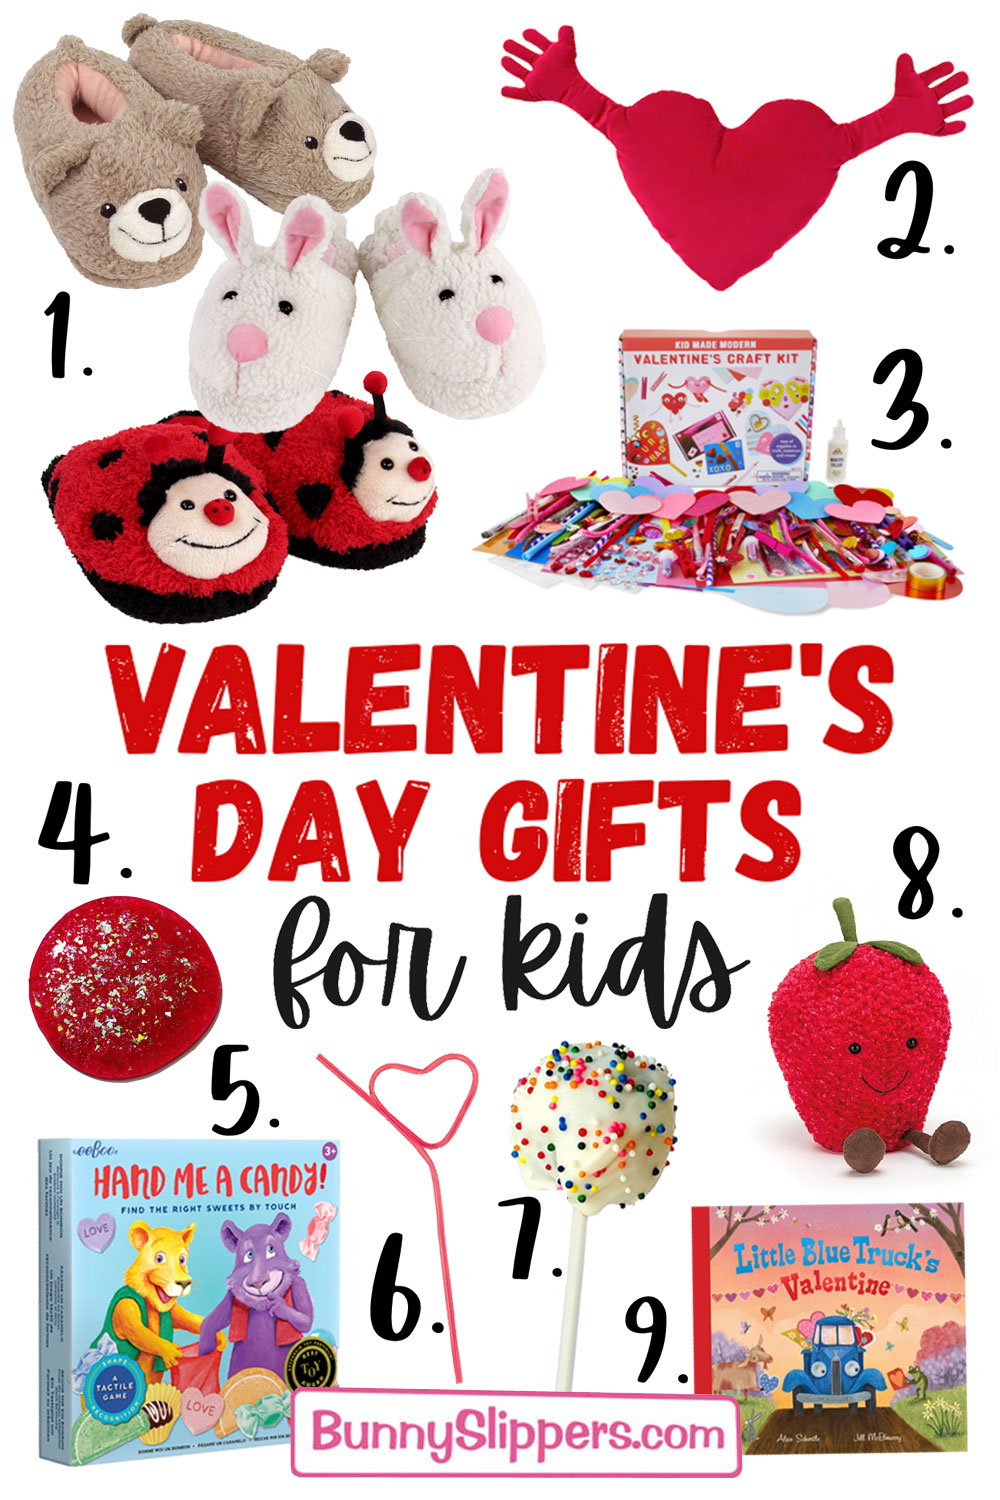 Valentine's day gifts for kids, 73% spento ottima vendita